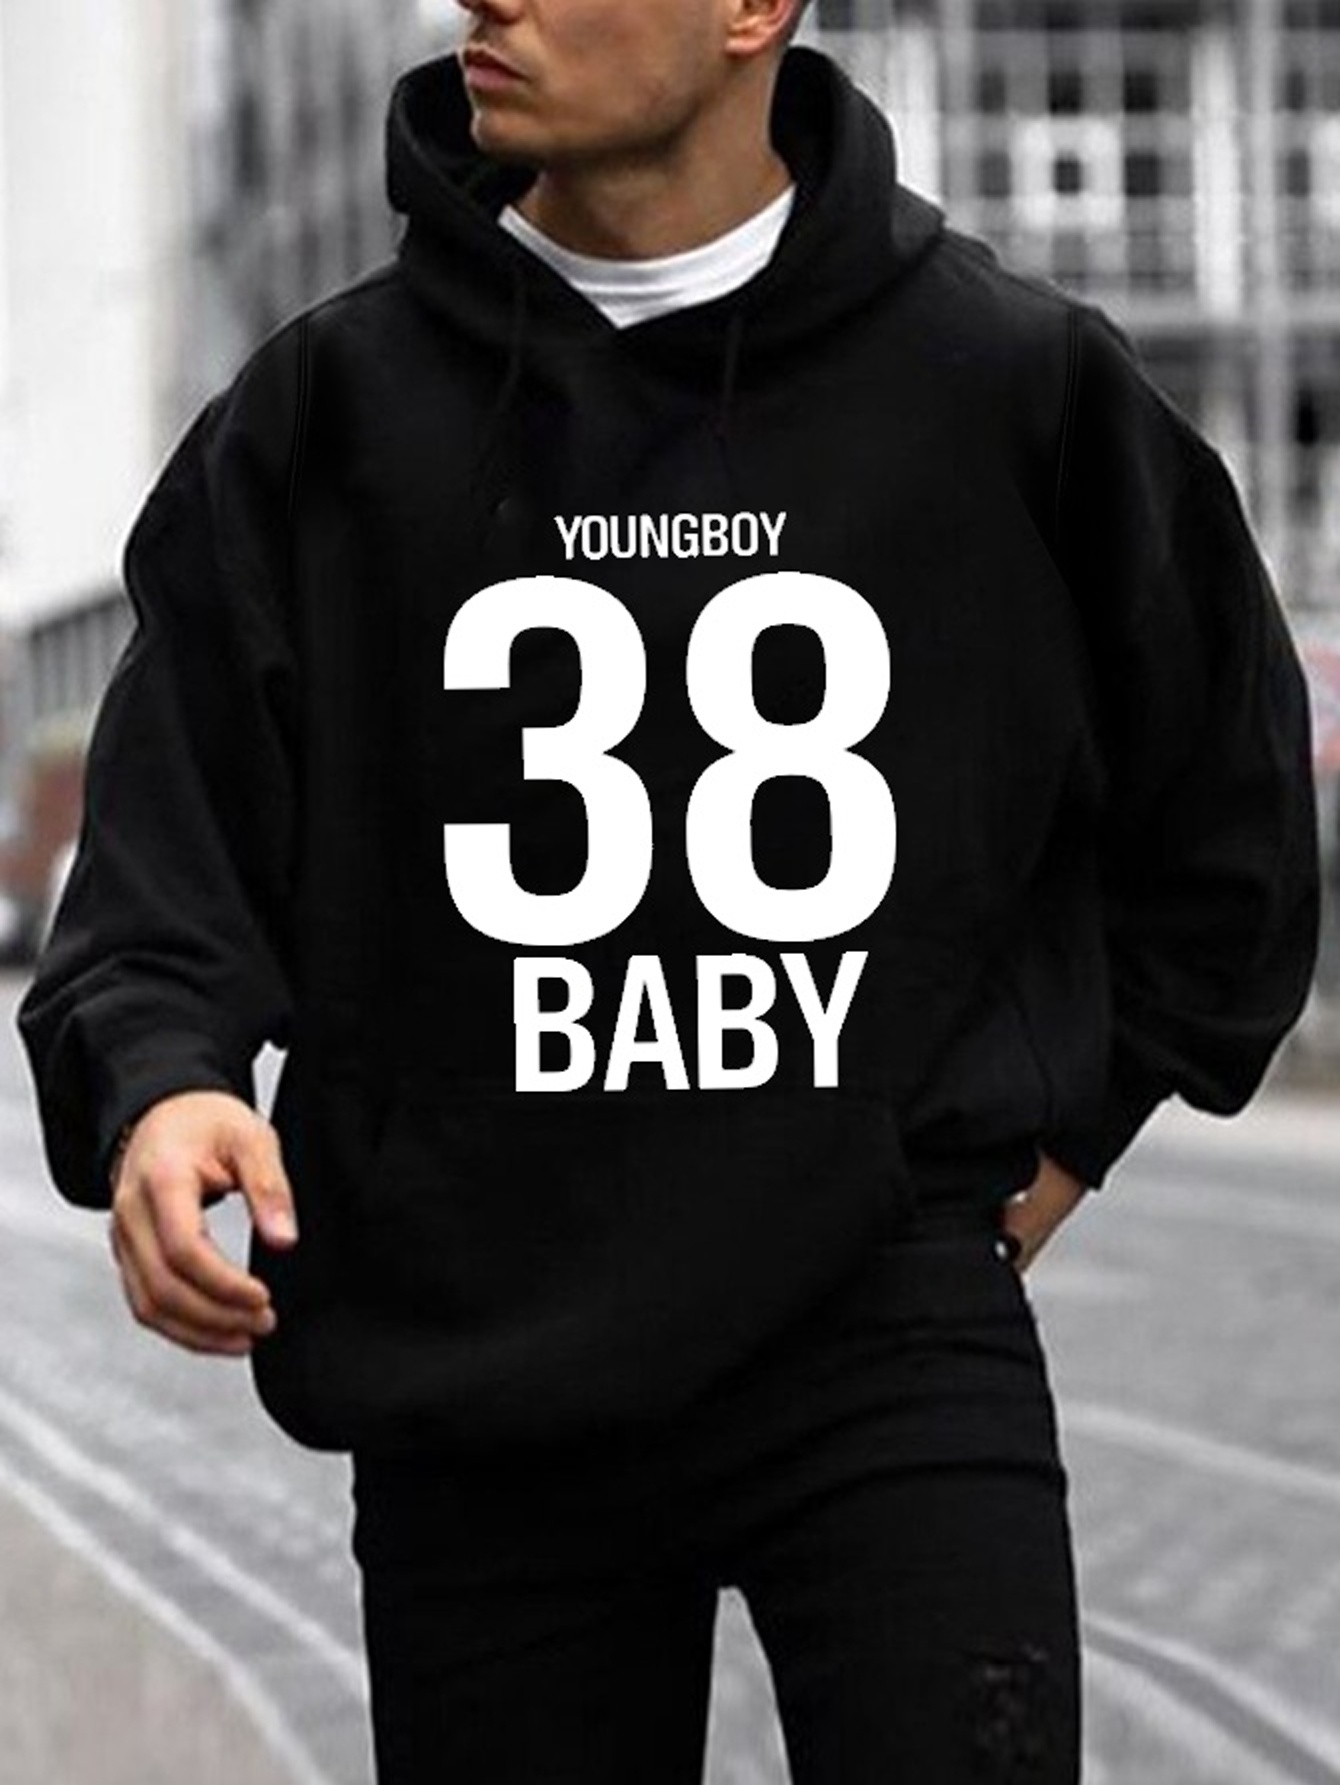 38 Baby Hoodies, T-Shirts NBA Youngboy T-Shirts, Hoodies, Sweatshirts